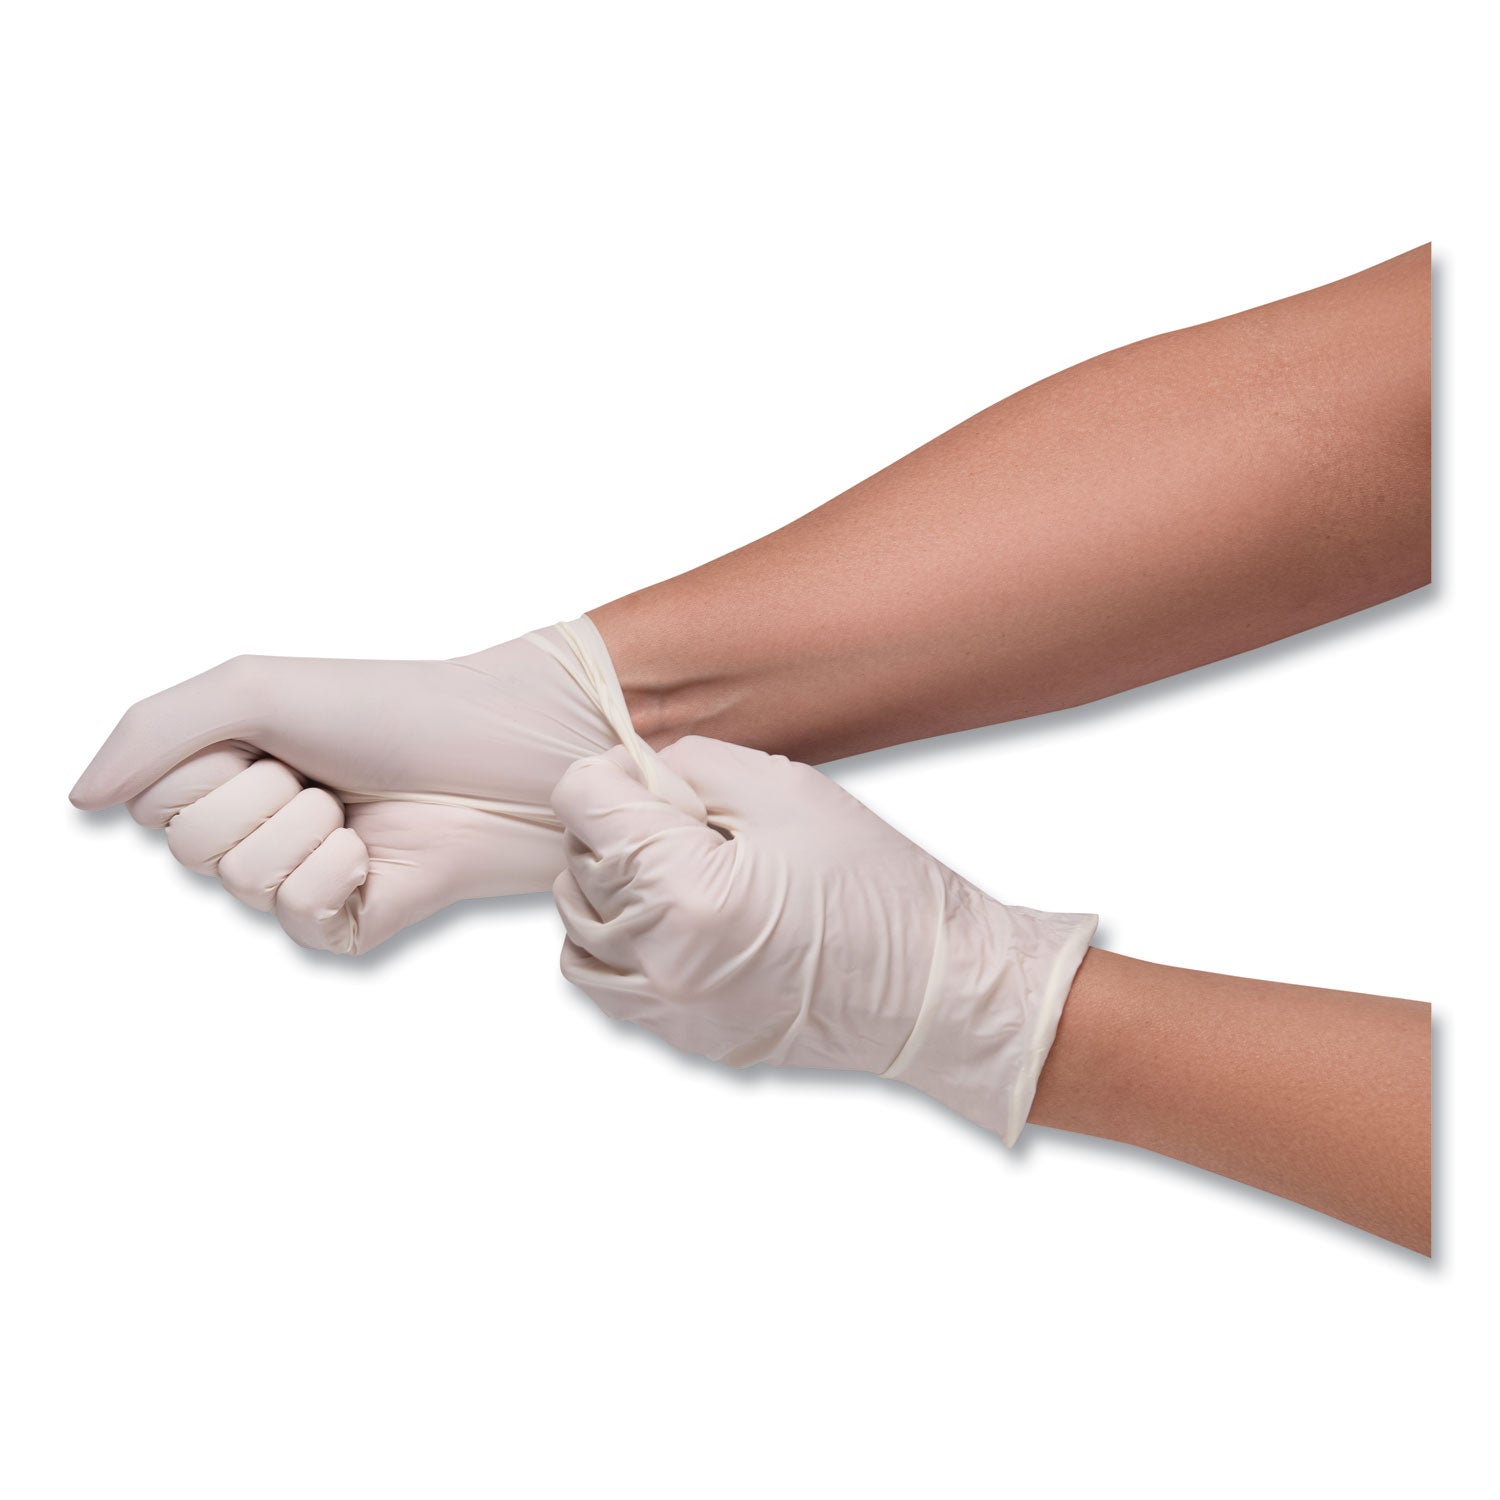 stretch-vinyl-examination-gloves-cream-x-large-100-box_sezscvnp105bx - 3